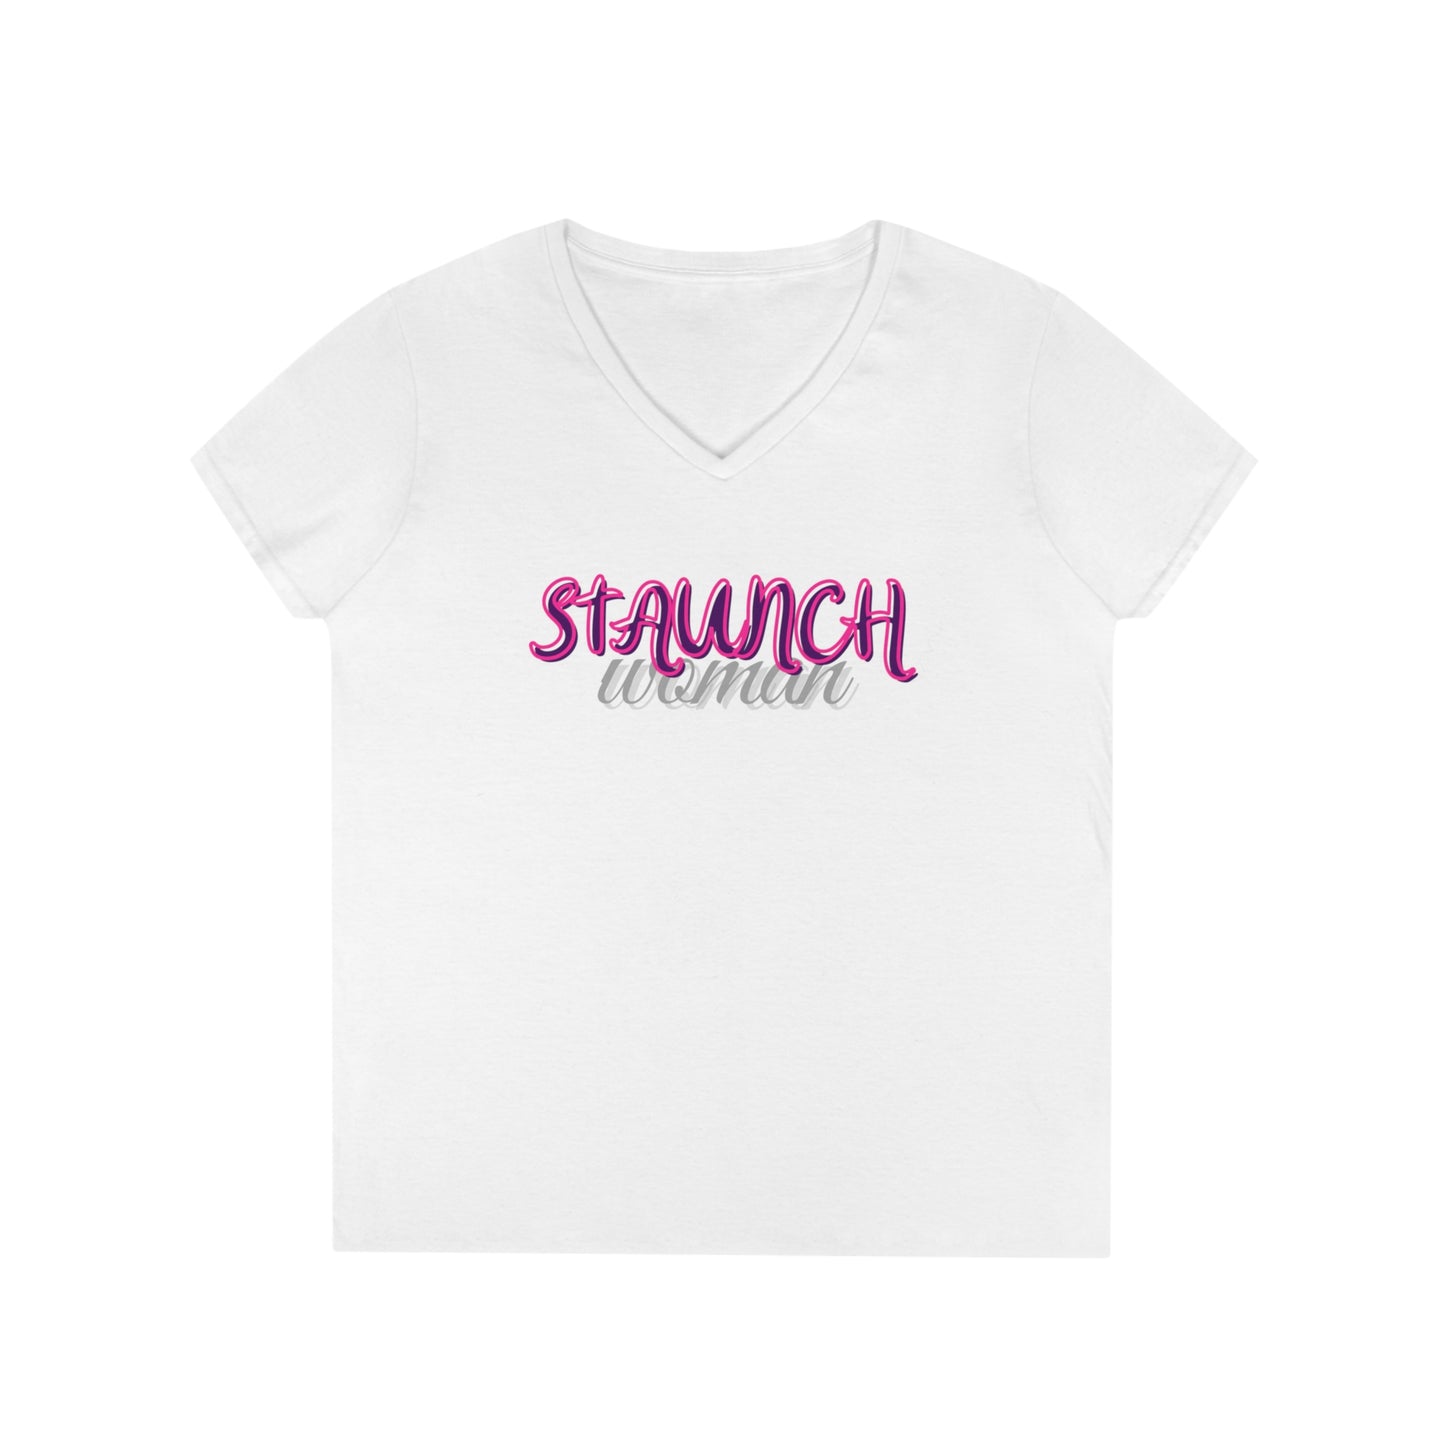 Staunch Woman Ladies' V-Neck T-Shirt